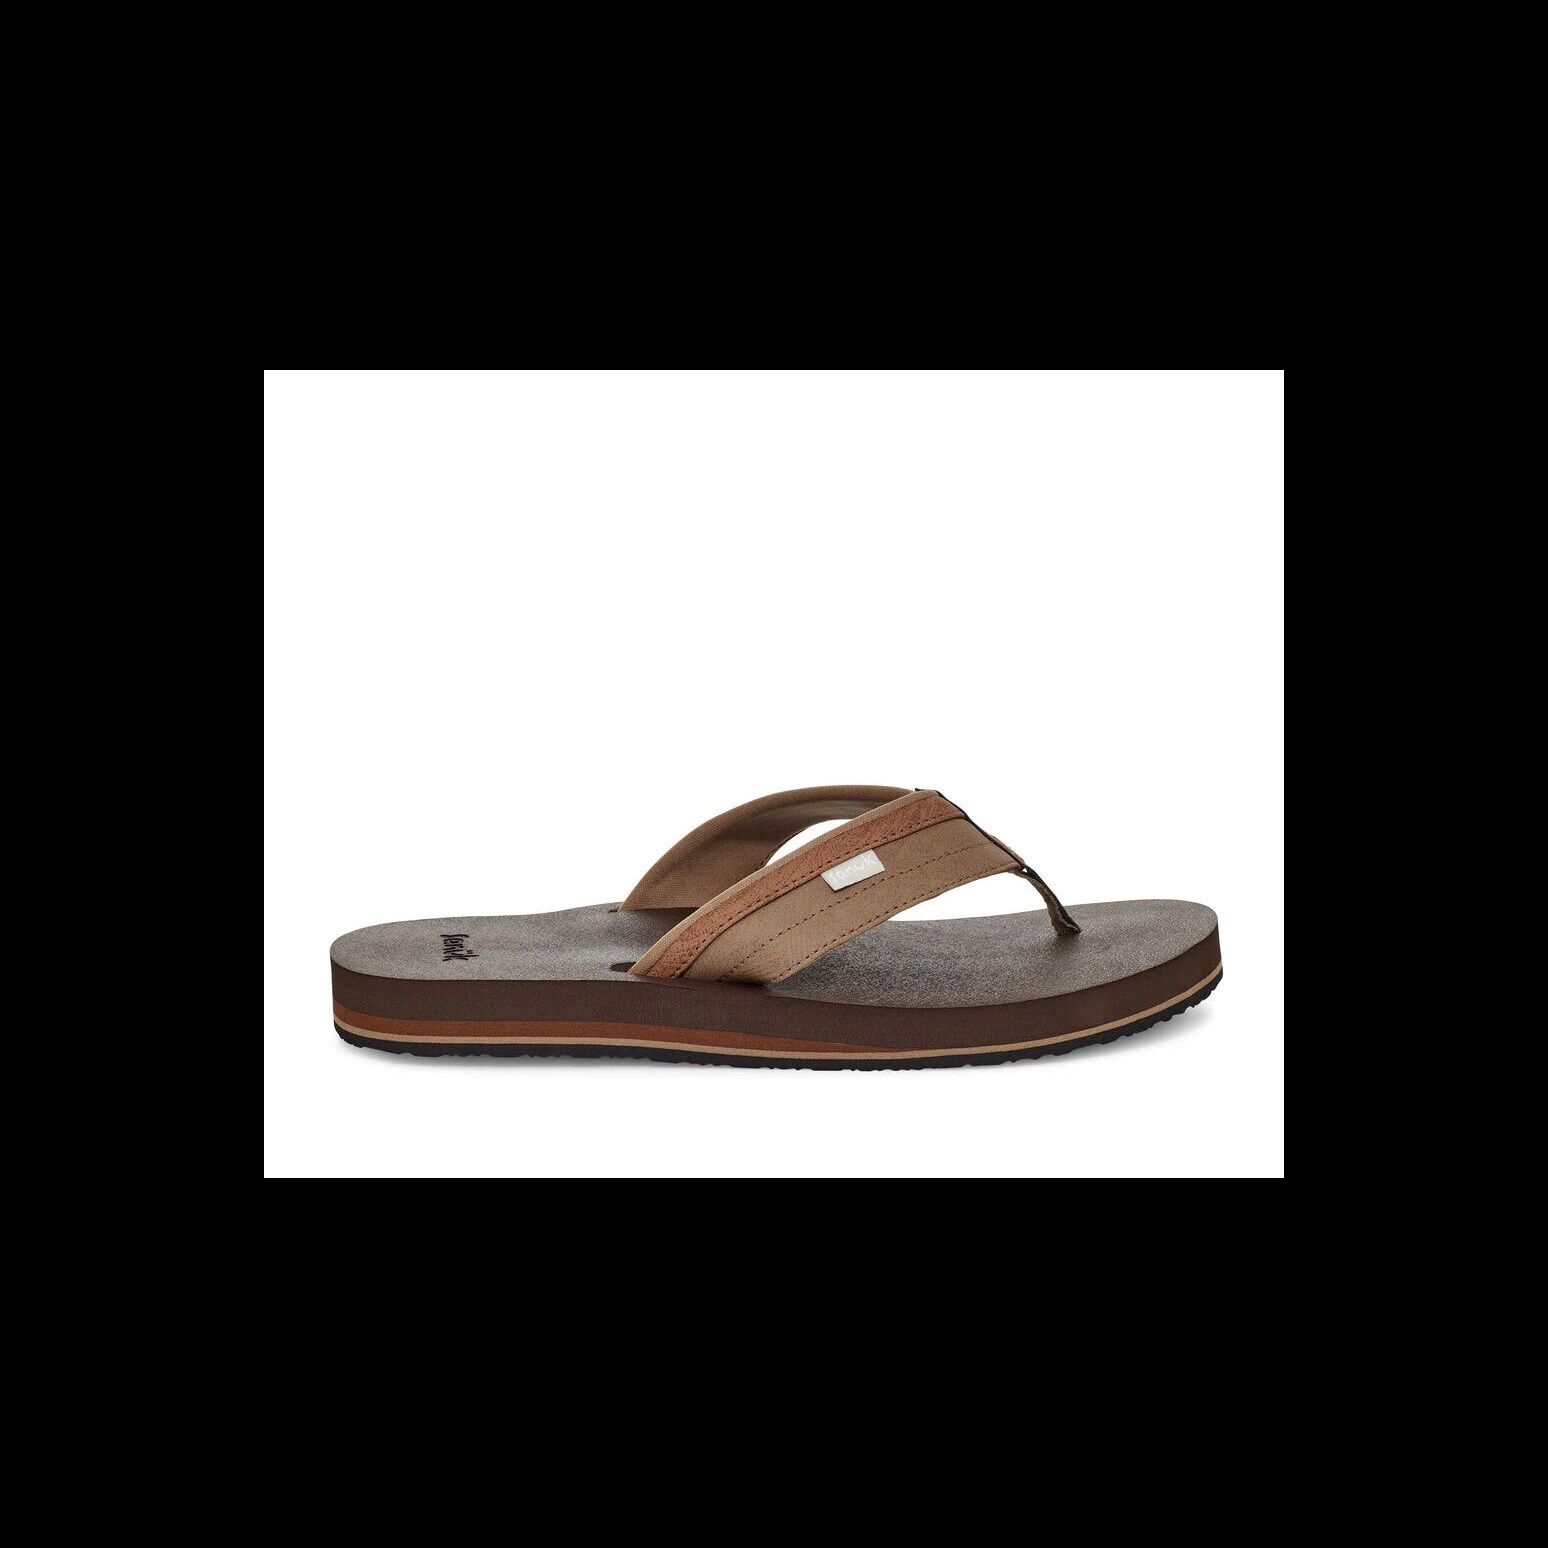 Sanuk Stripes Multi Color Gray Sandals Size 8 - 63% off